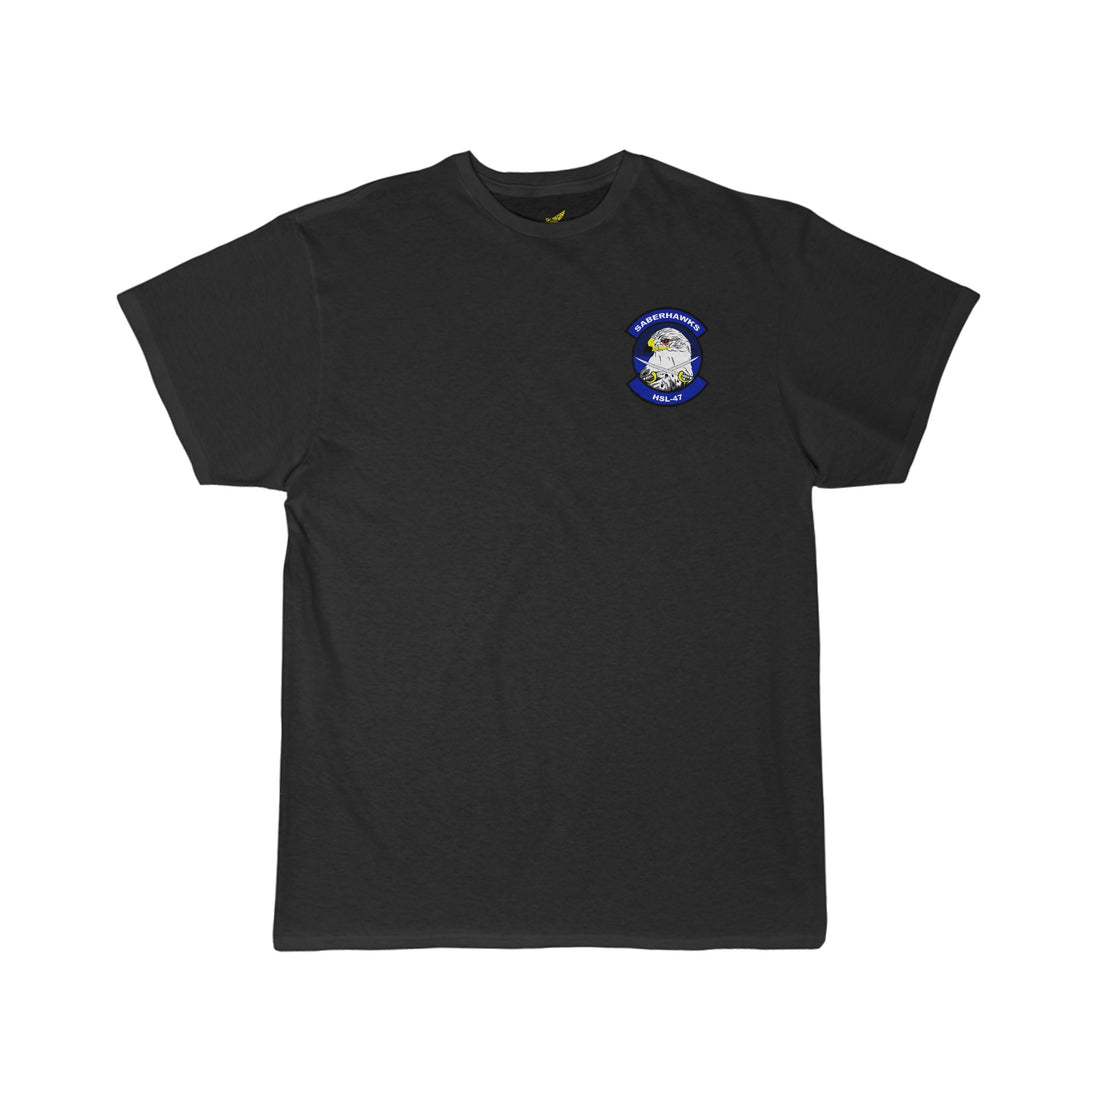 HSL-47 Saberhawks T-Shirt